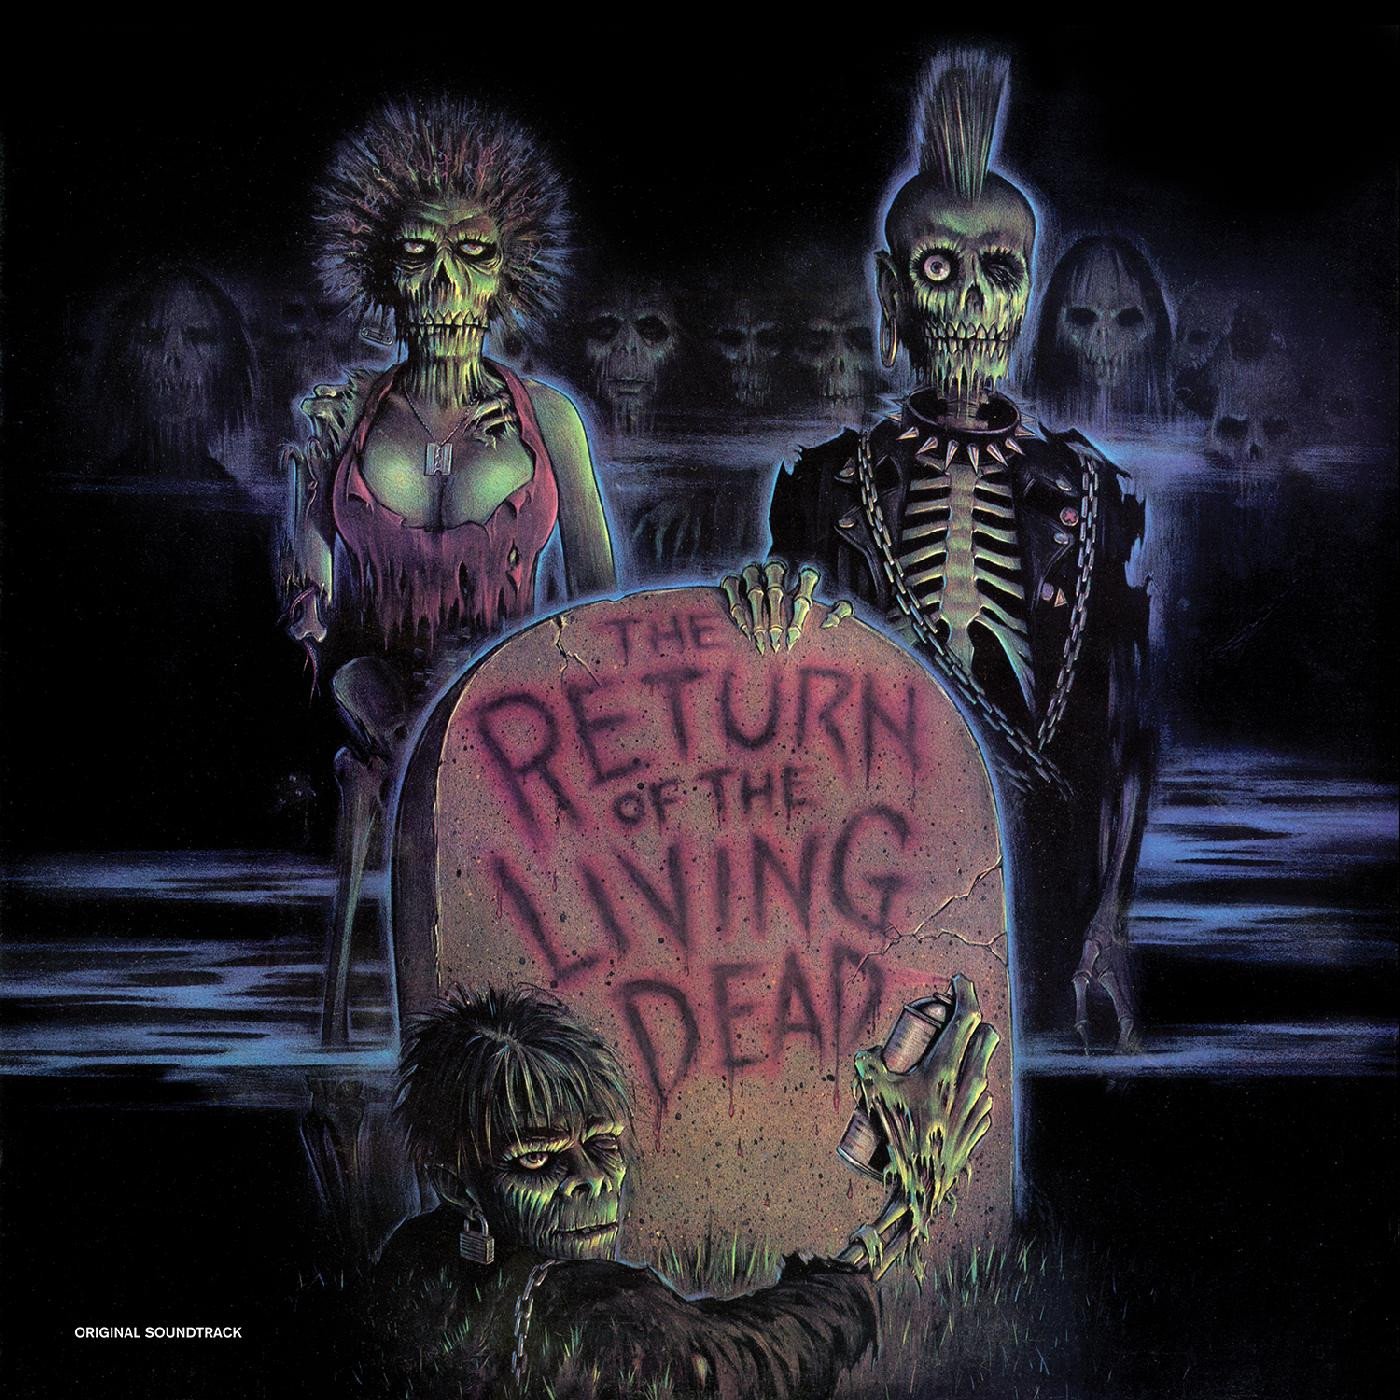 THE RETURN OF THE LIVING DEAD SOUNDTRACK LP (Clear & Blood Red Splatter Vinyl)